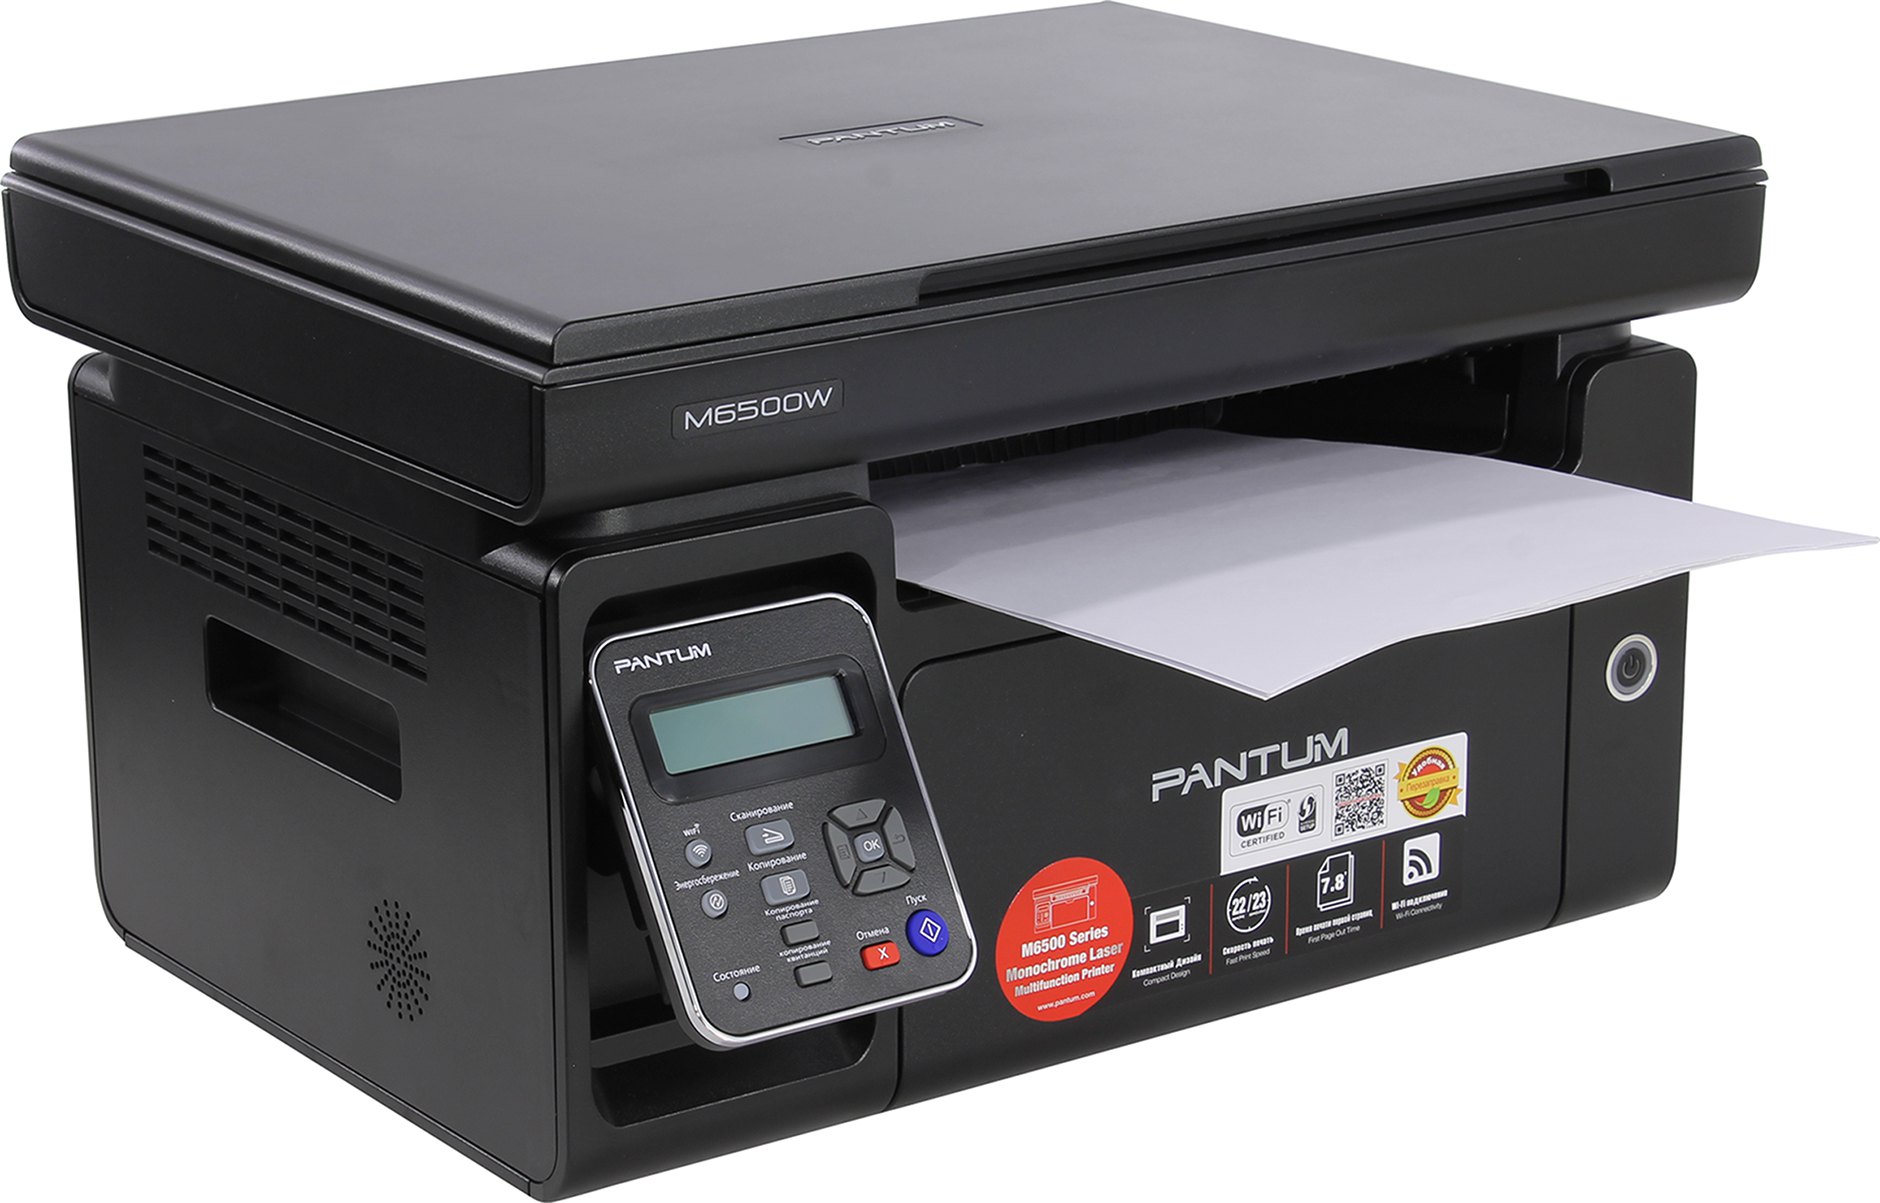 МФУ Pantum M6500W, лазерный копир/принтер/сканер, A4, 22 стр/мин, 1200×1200 dpi, 128Мб, лоток 150 ст